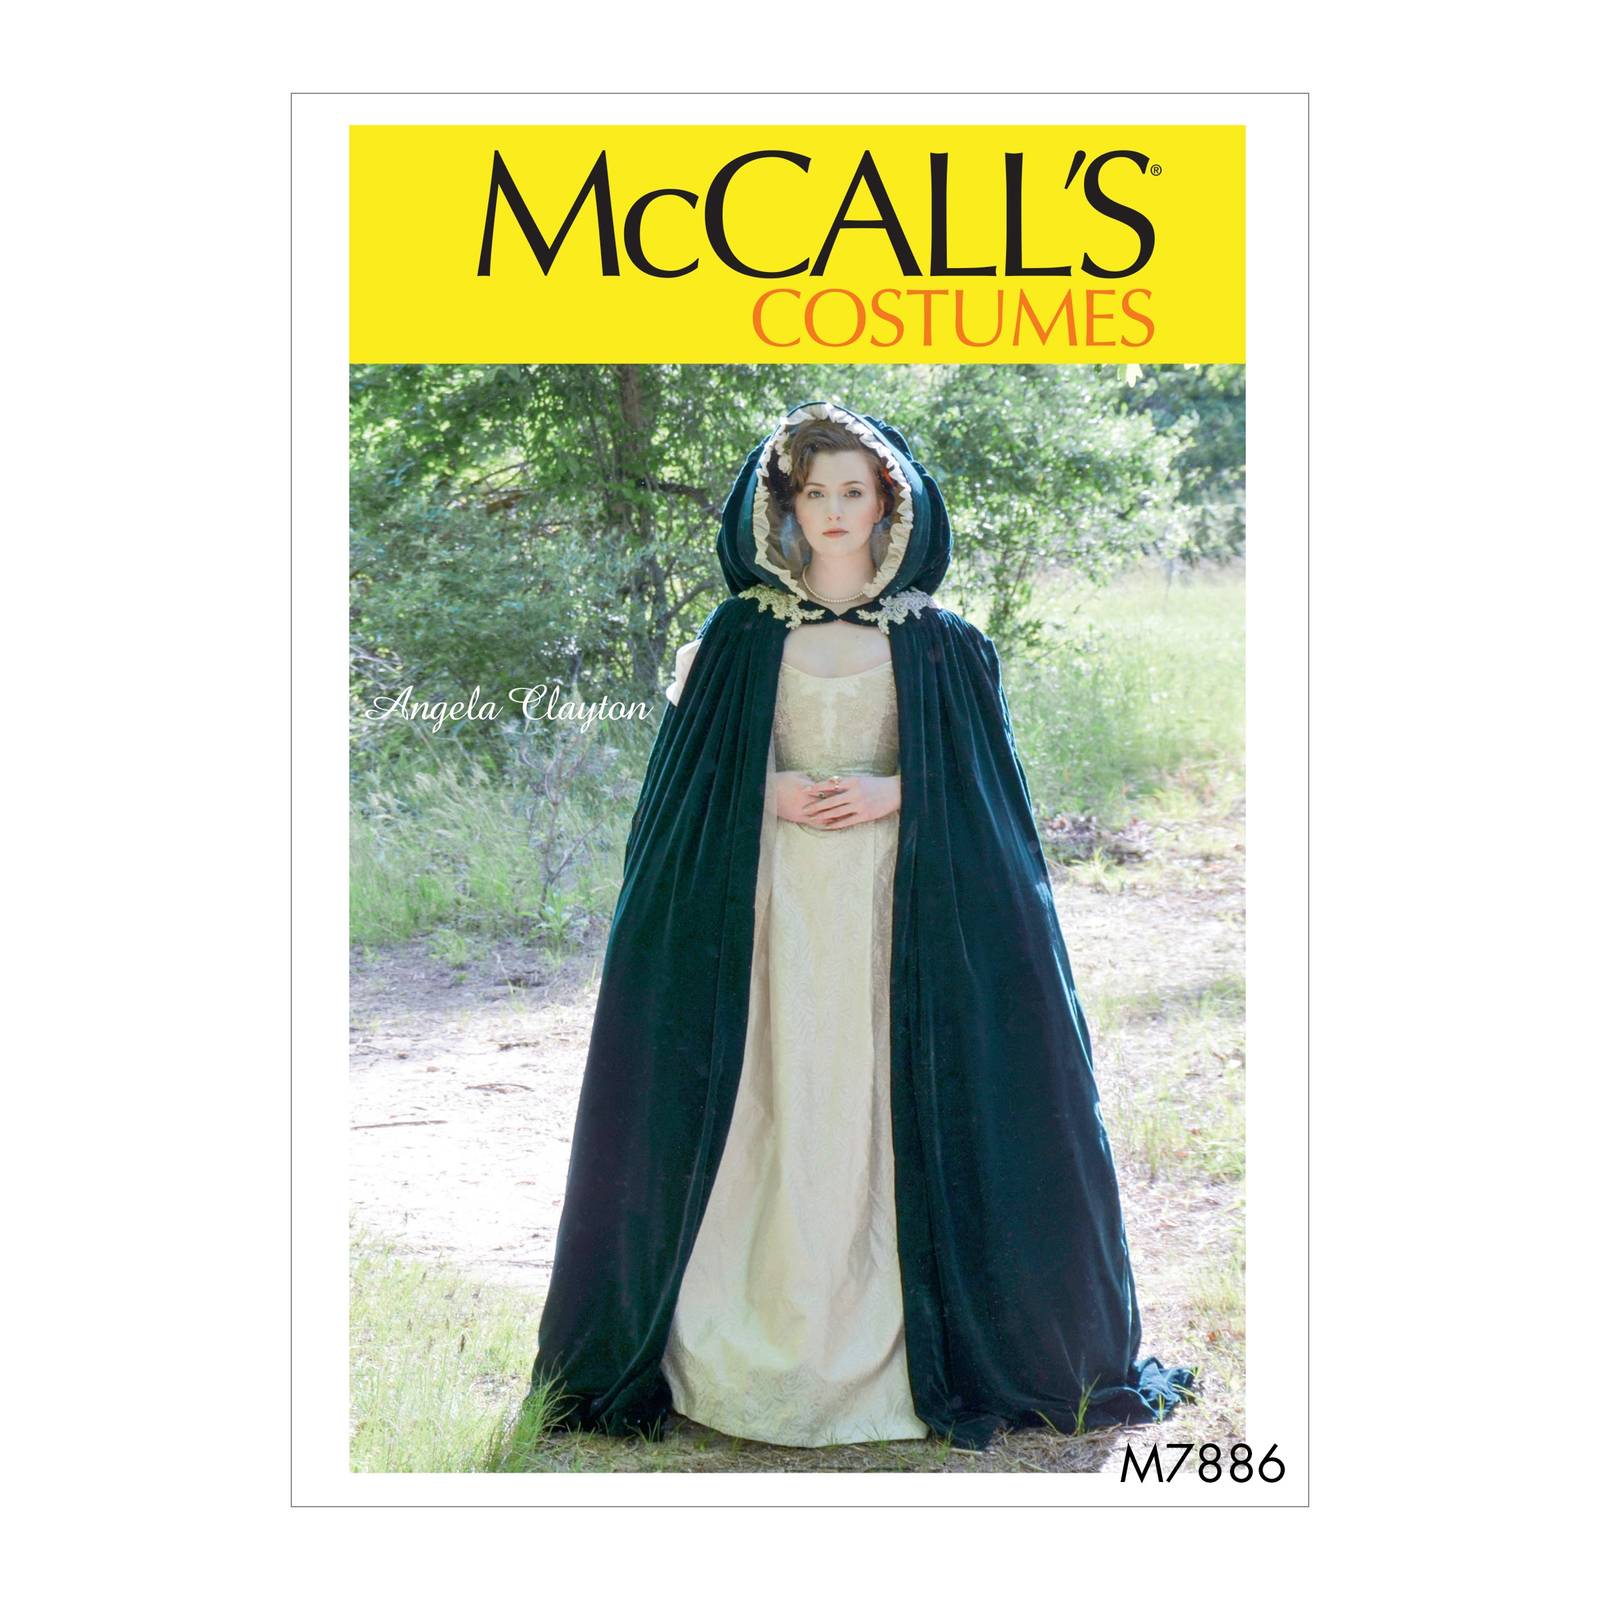 McCalls 7886